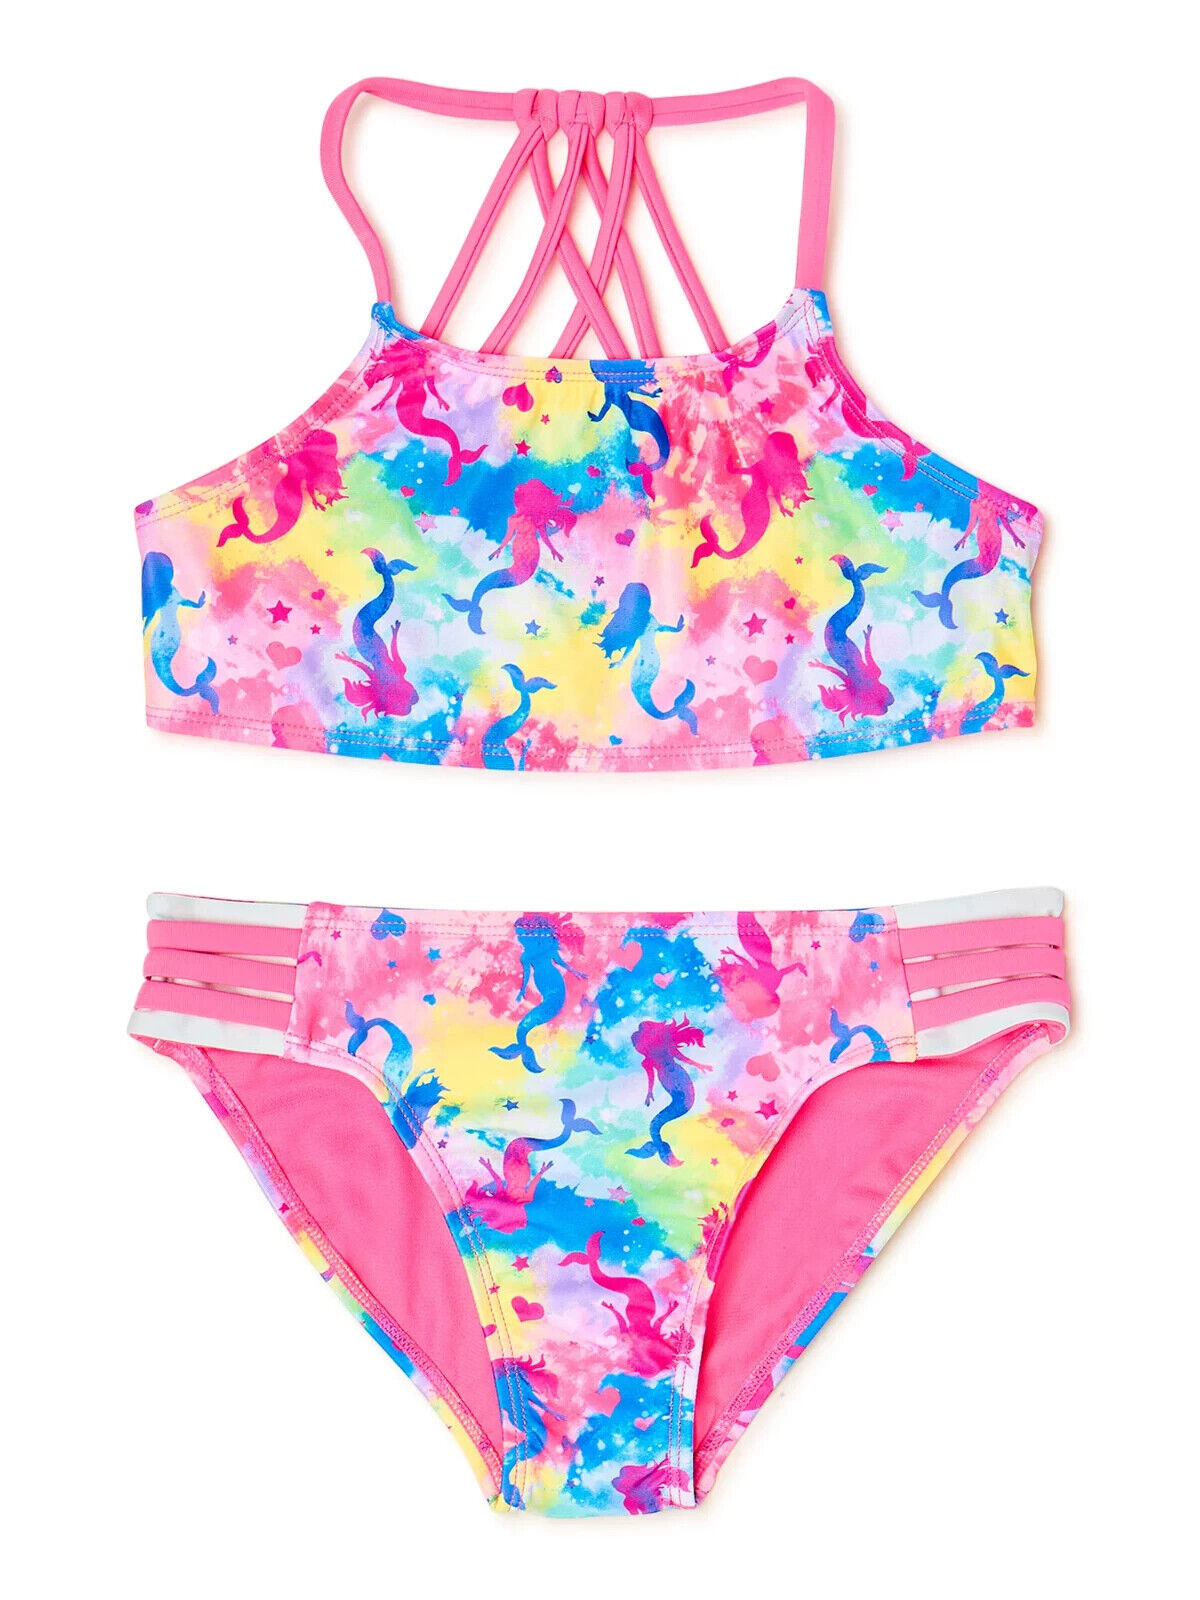 Primary image for Wonder Nation Girls 2-Piece Mermaid Bikini Swimsuit, Pink Size XL(14-16)